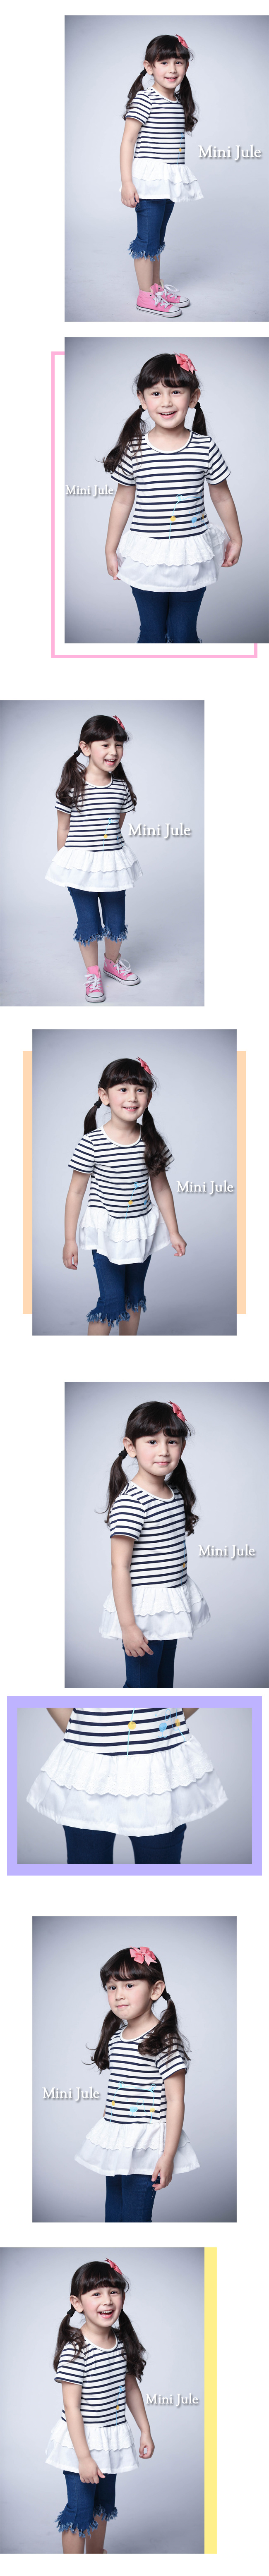 Mini Jule 童裝-上衣 線條熊條紋拼接短袖T恤(寶藍)